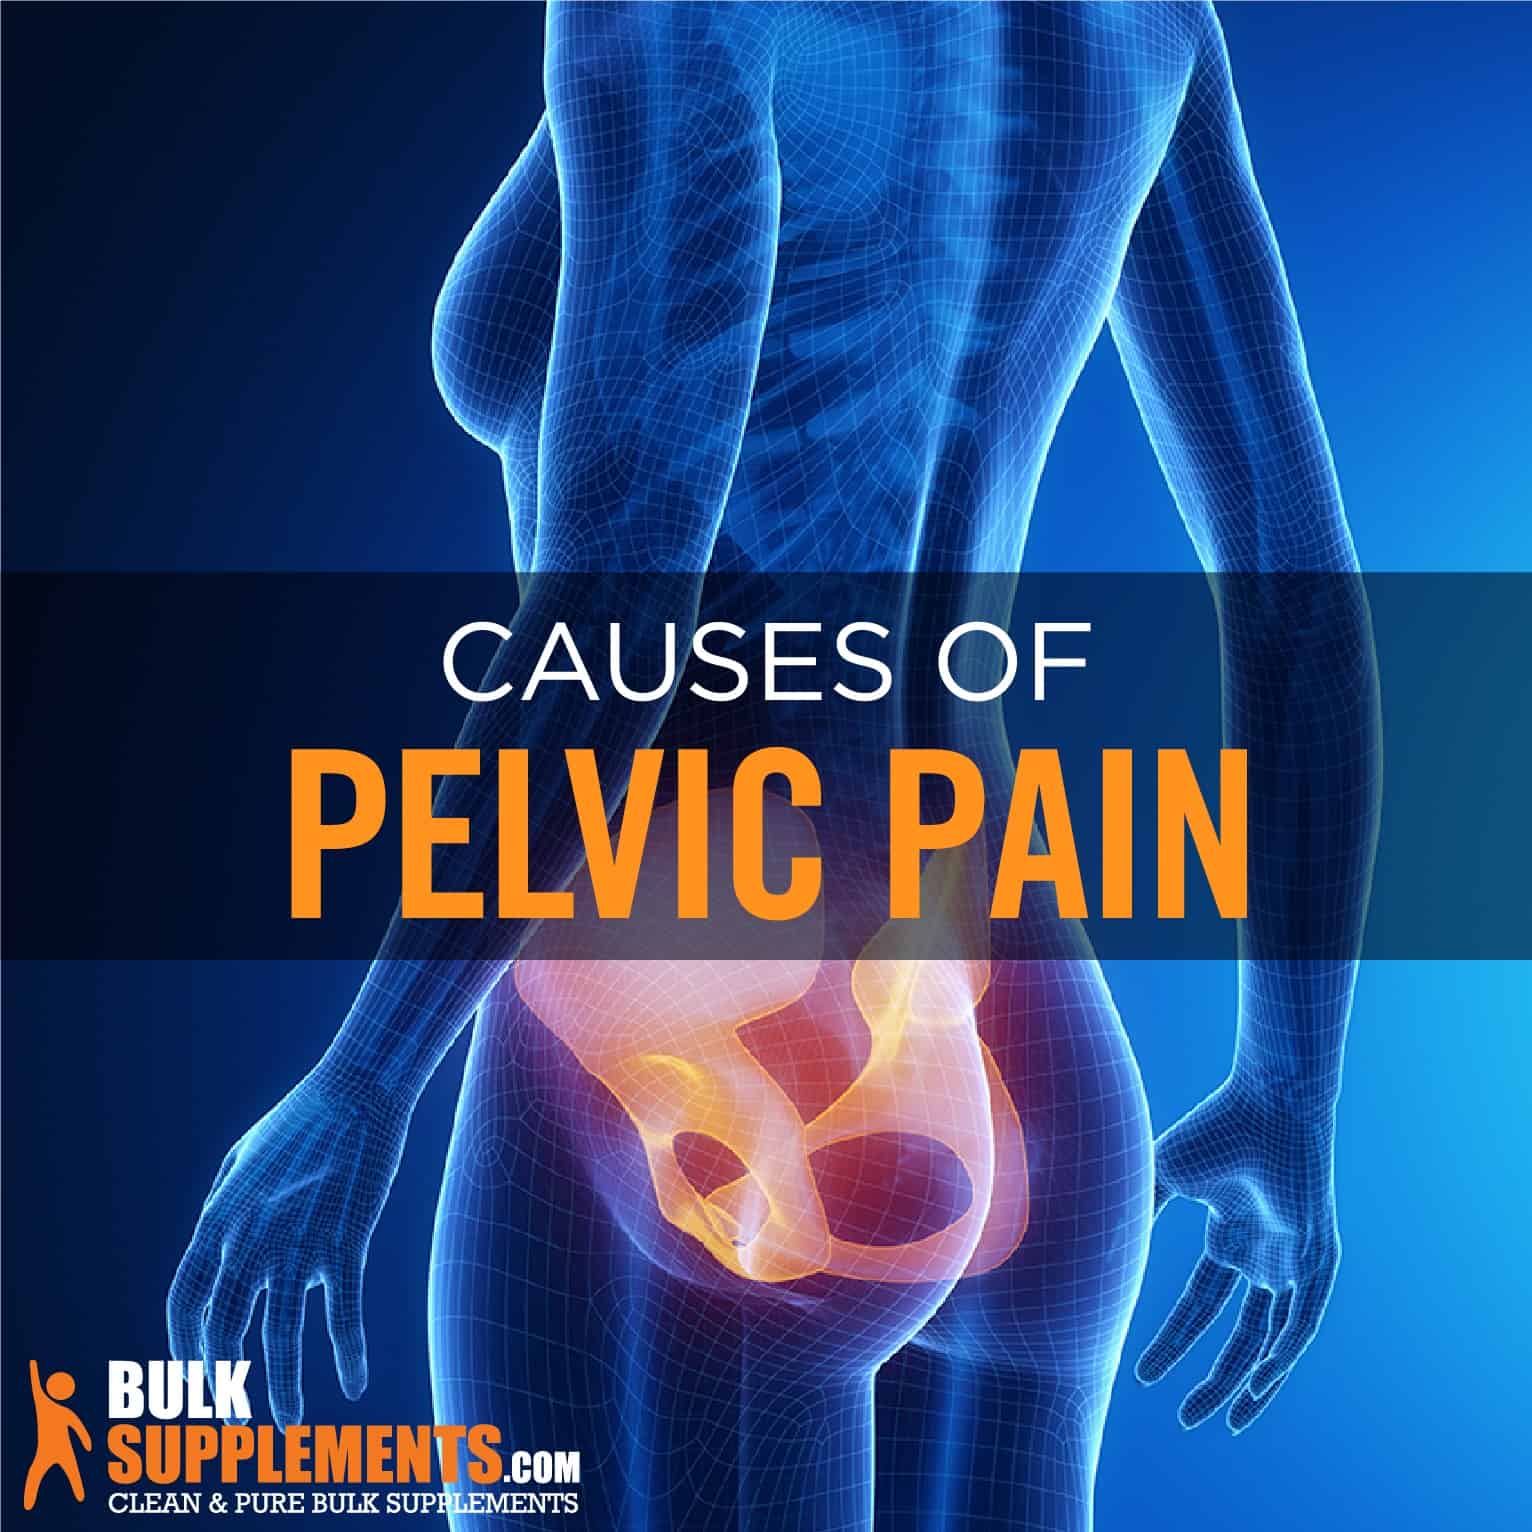 Chronic Pelvic Pain: Causes, Characteristics & Treatment